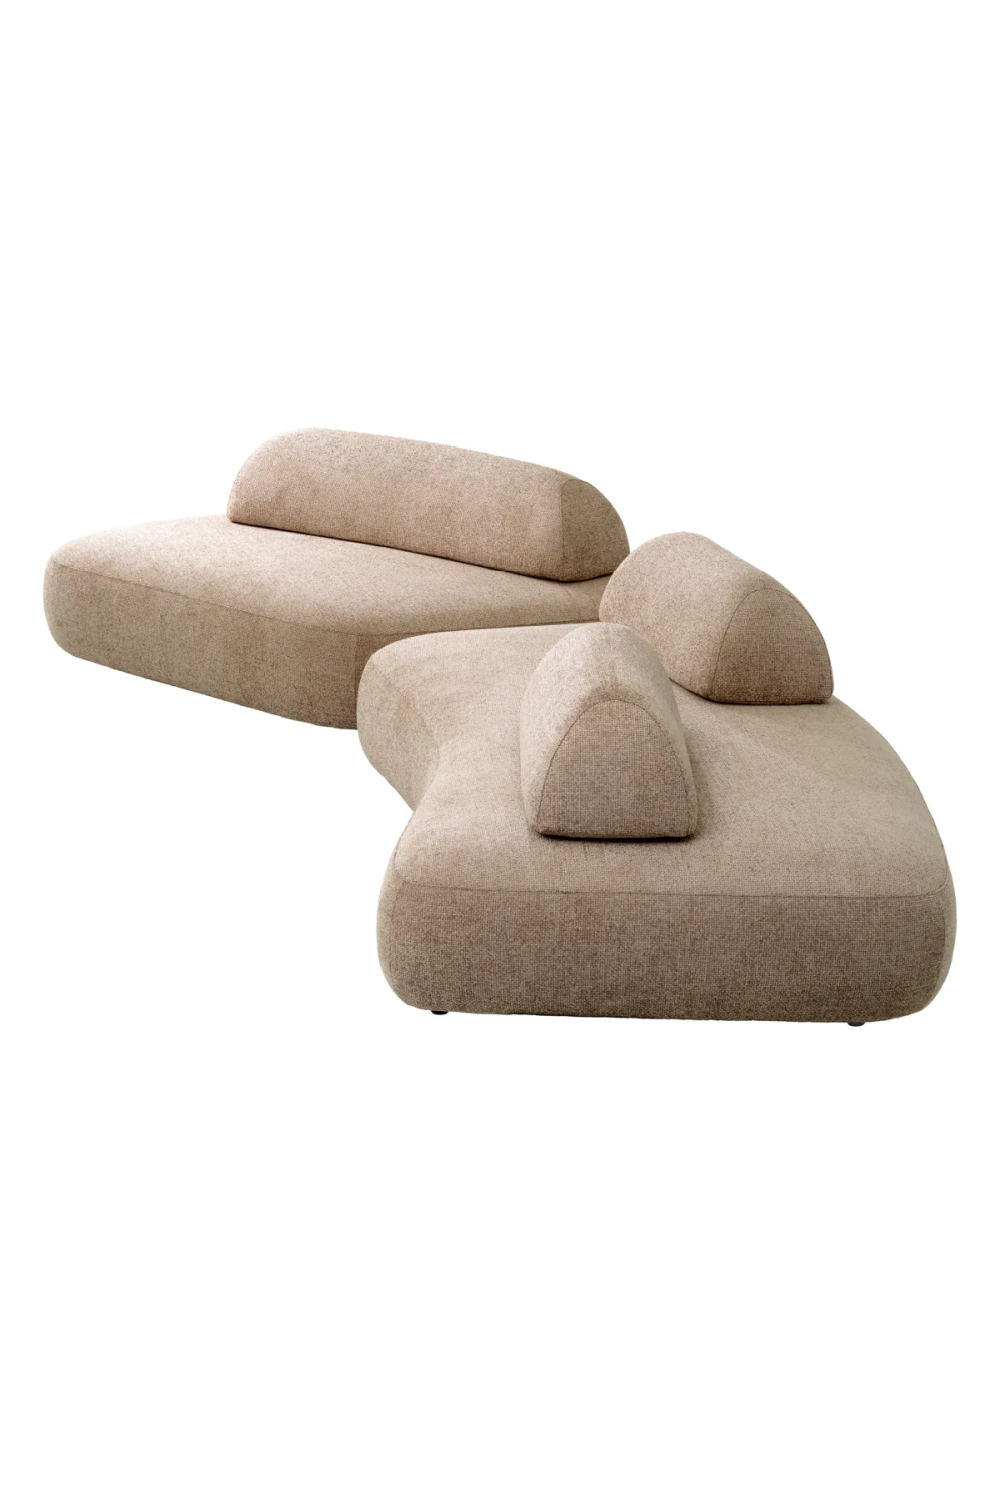 Curved Modern Sofa | Eichholtz Residenza | Oroa.com